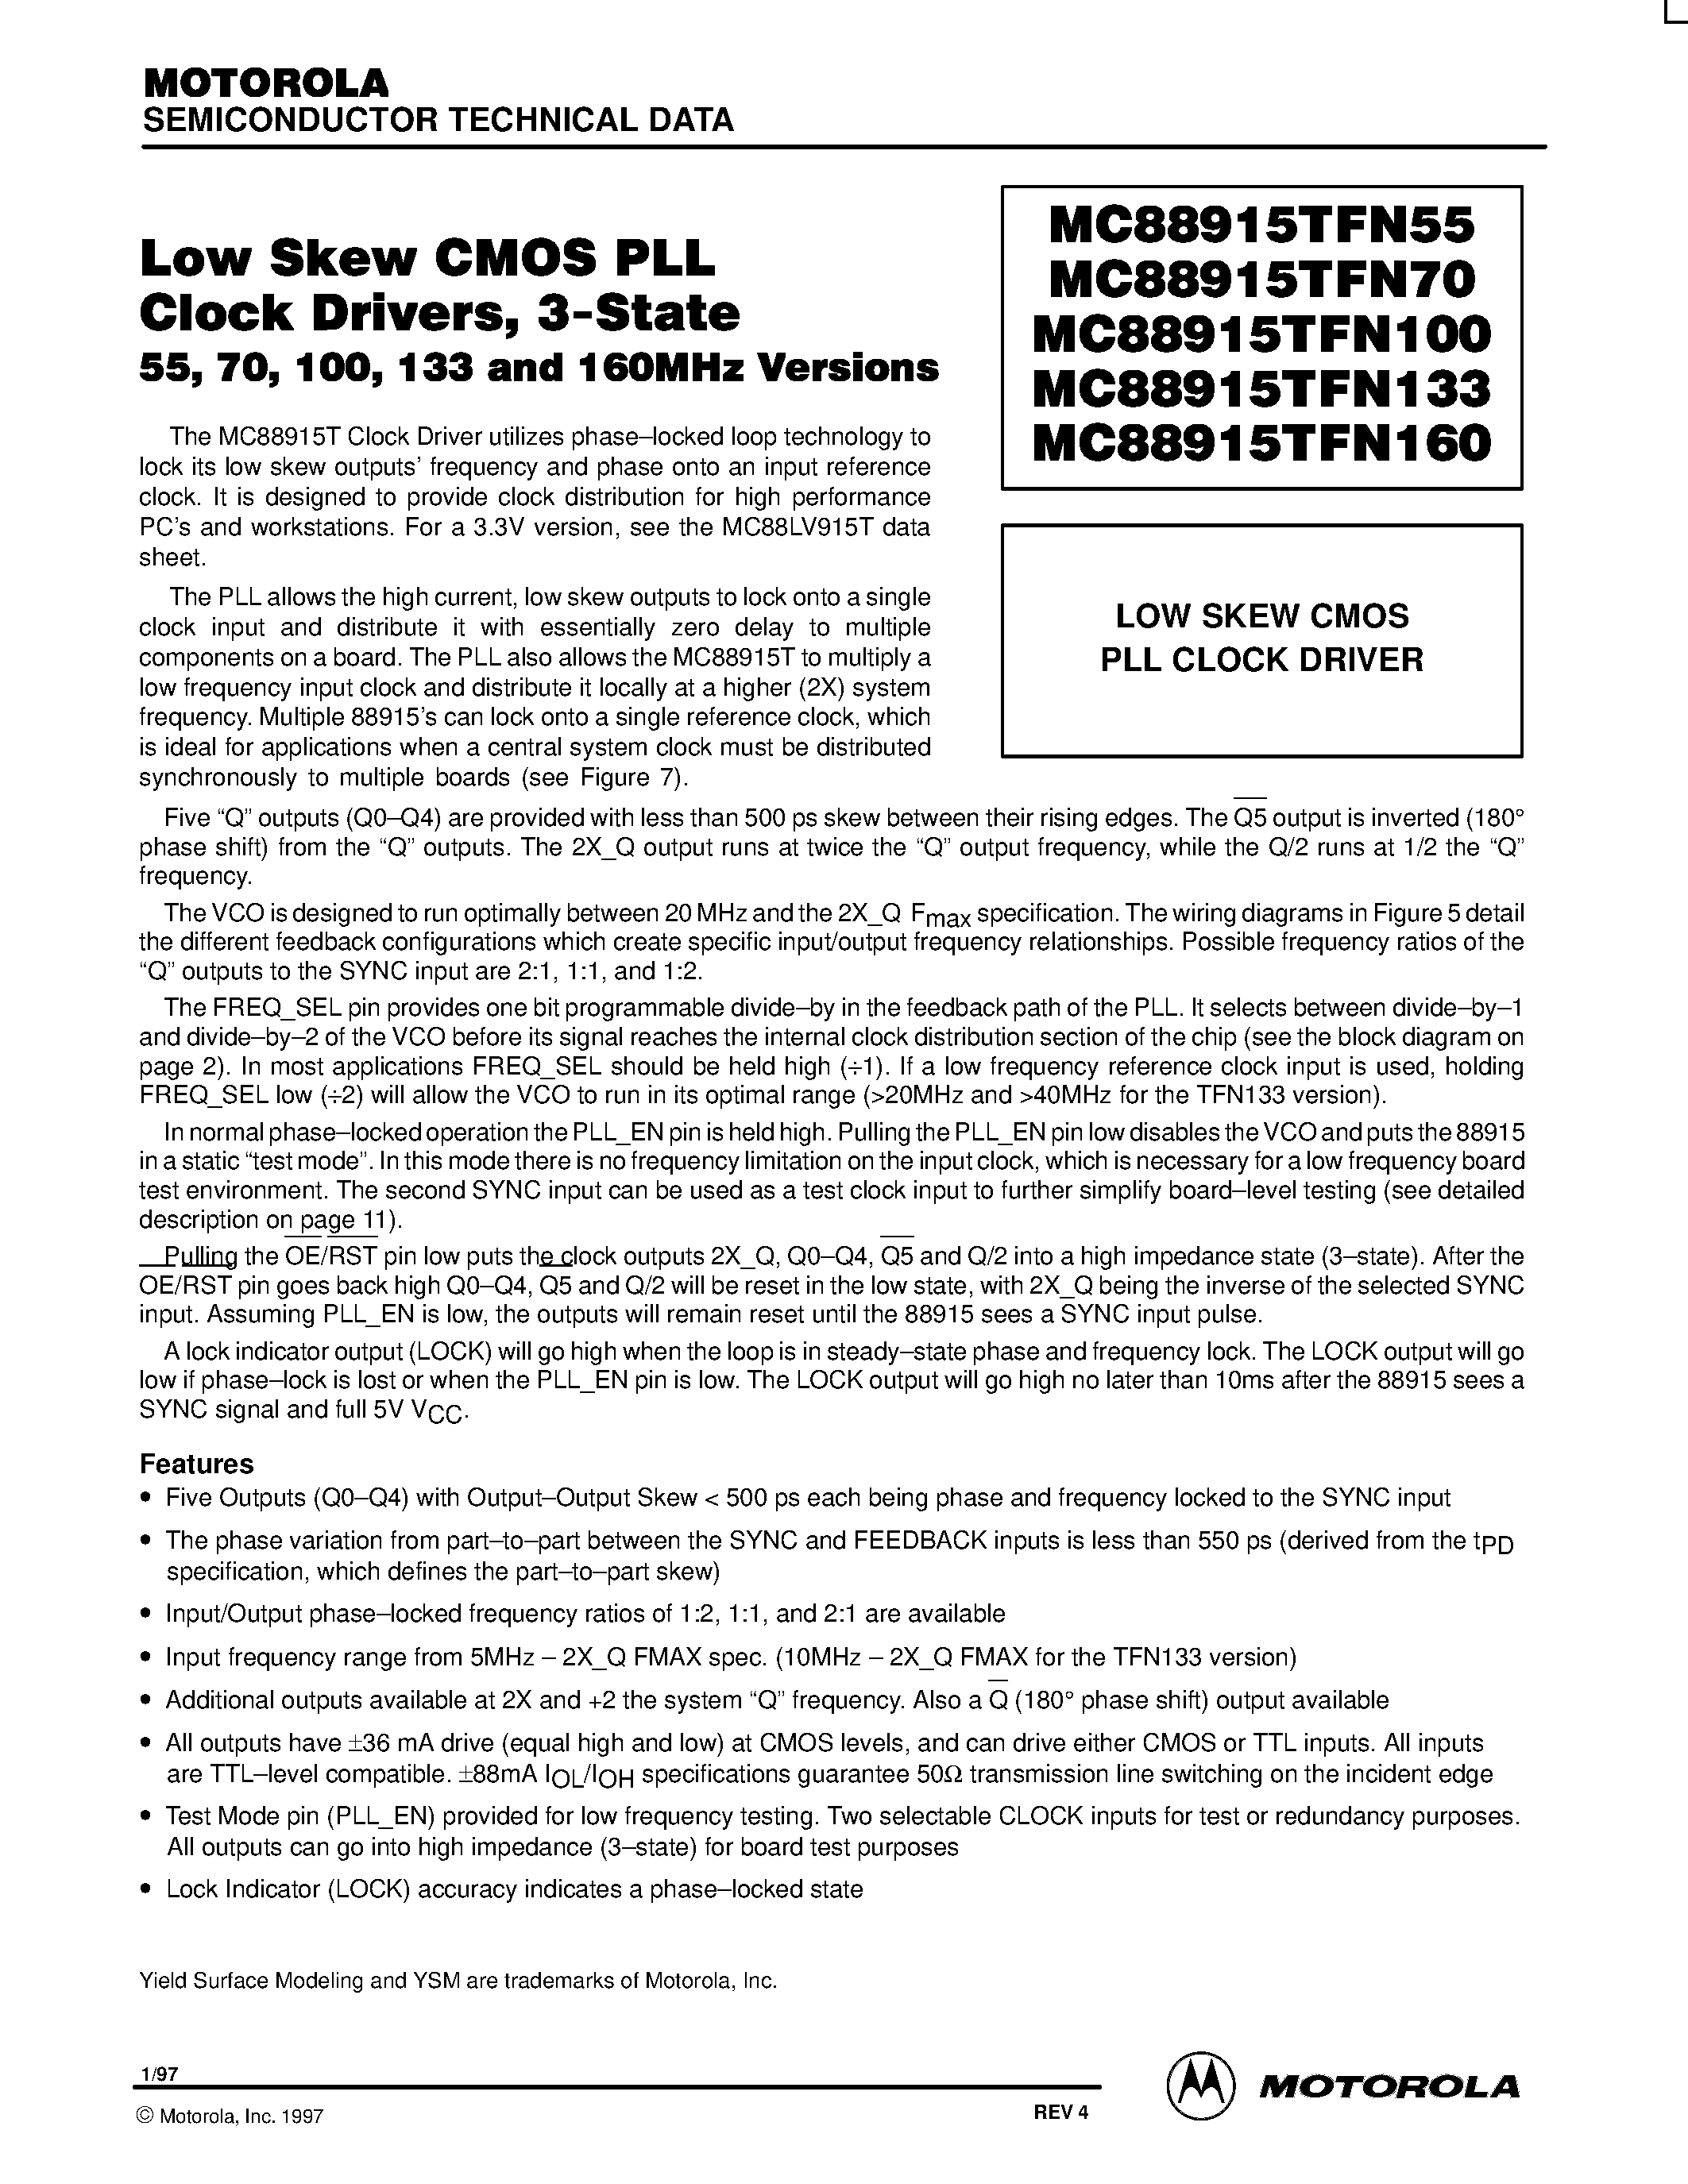 Datasheet MC88915T - LOW SKEW CMOS PLL CLOCK DRIVER page 1